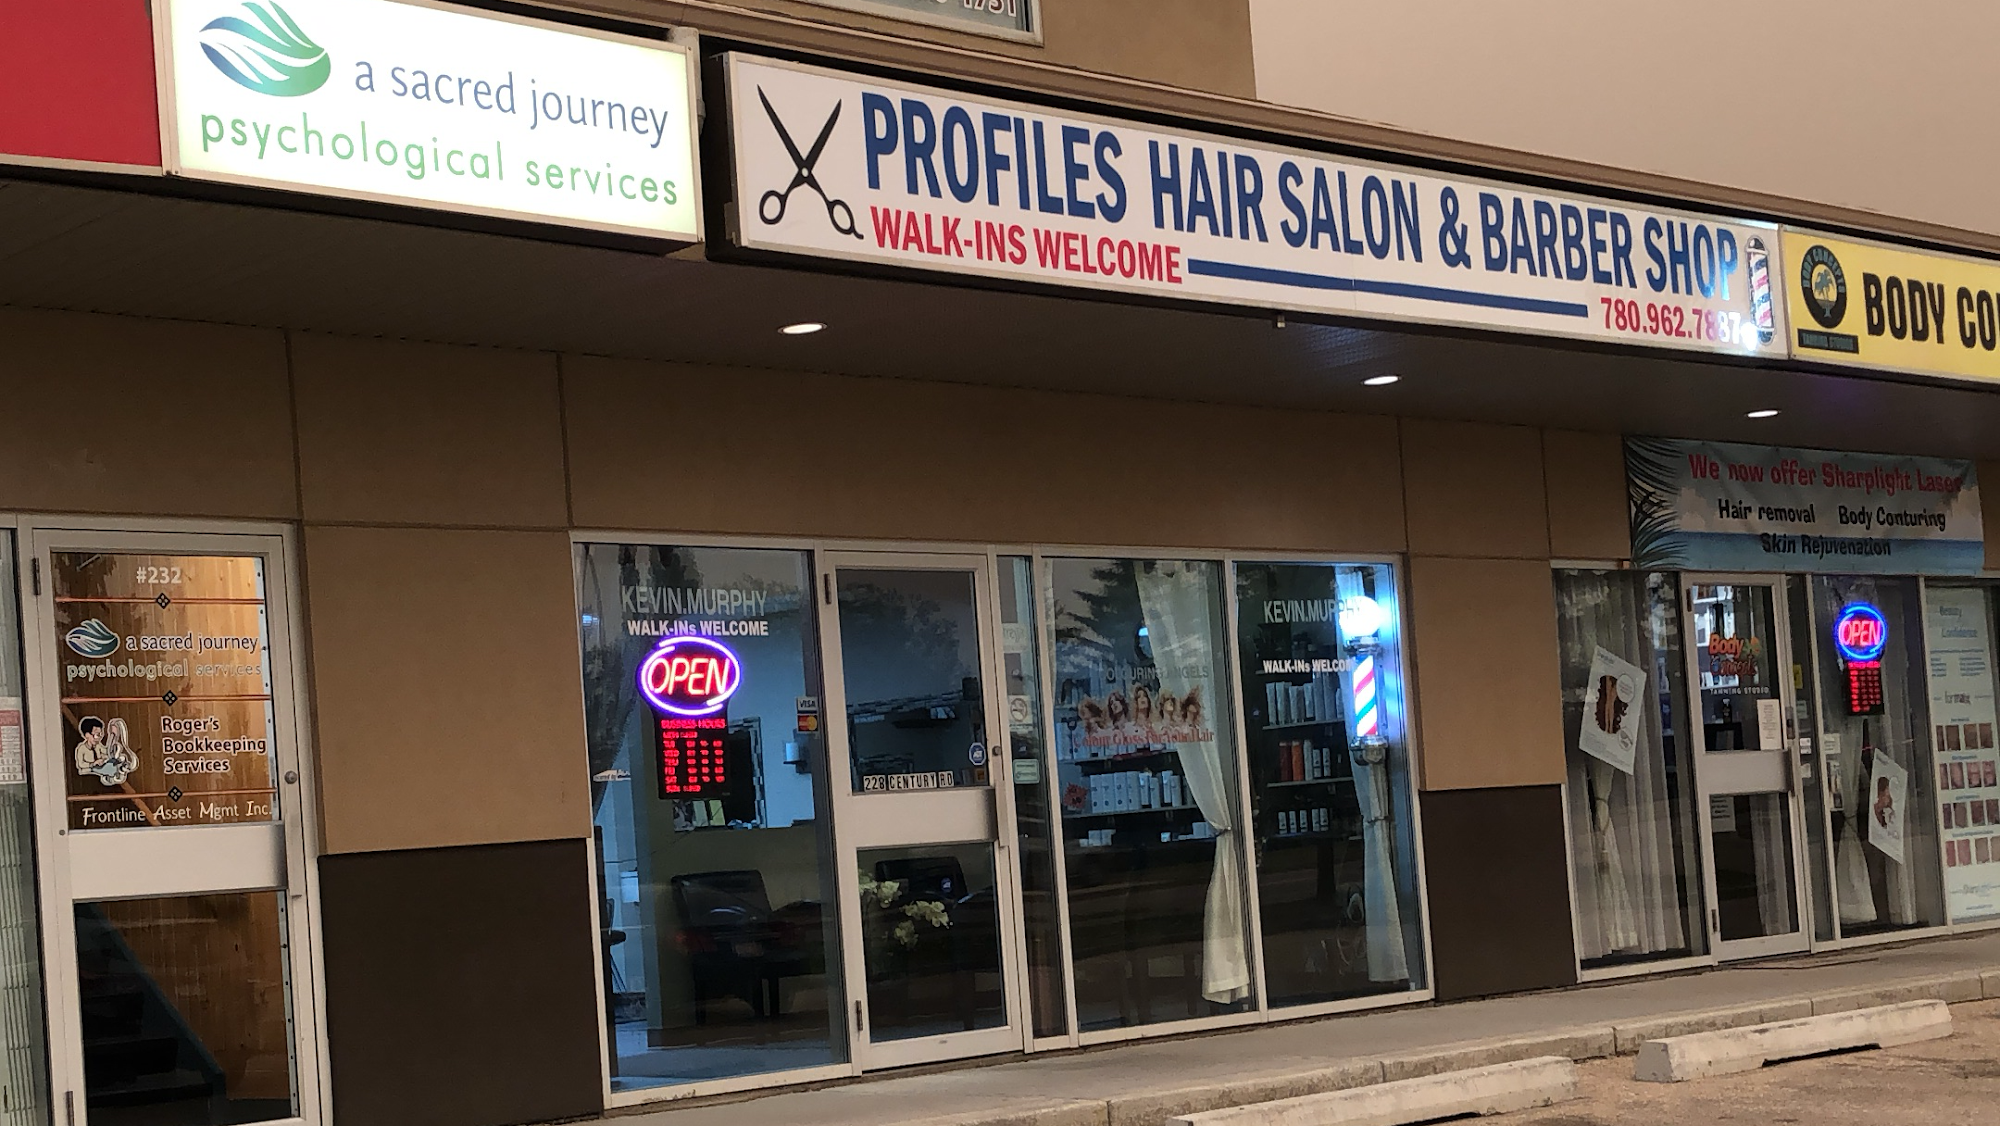 Profiles Hair Salon & Barbershop